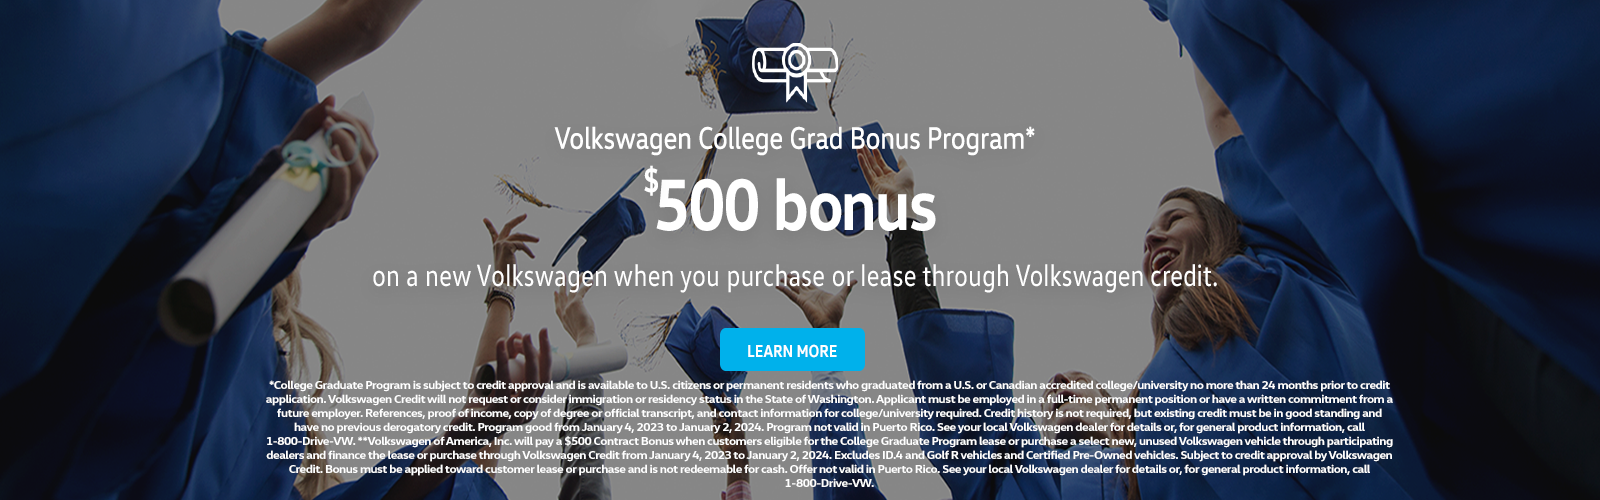 Volkswagen College Grad Bonus Program For in Stock VW